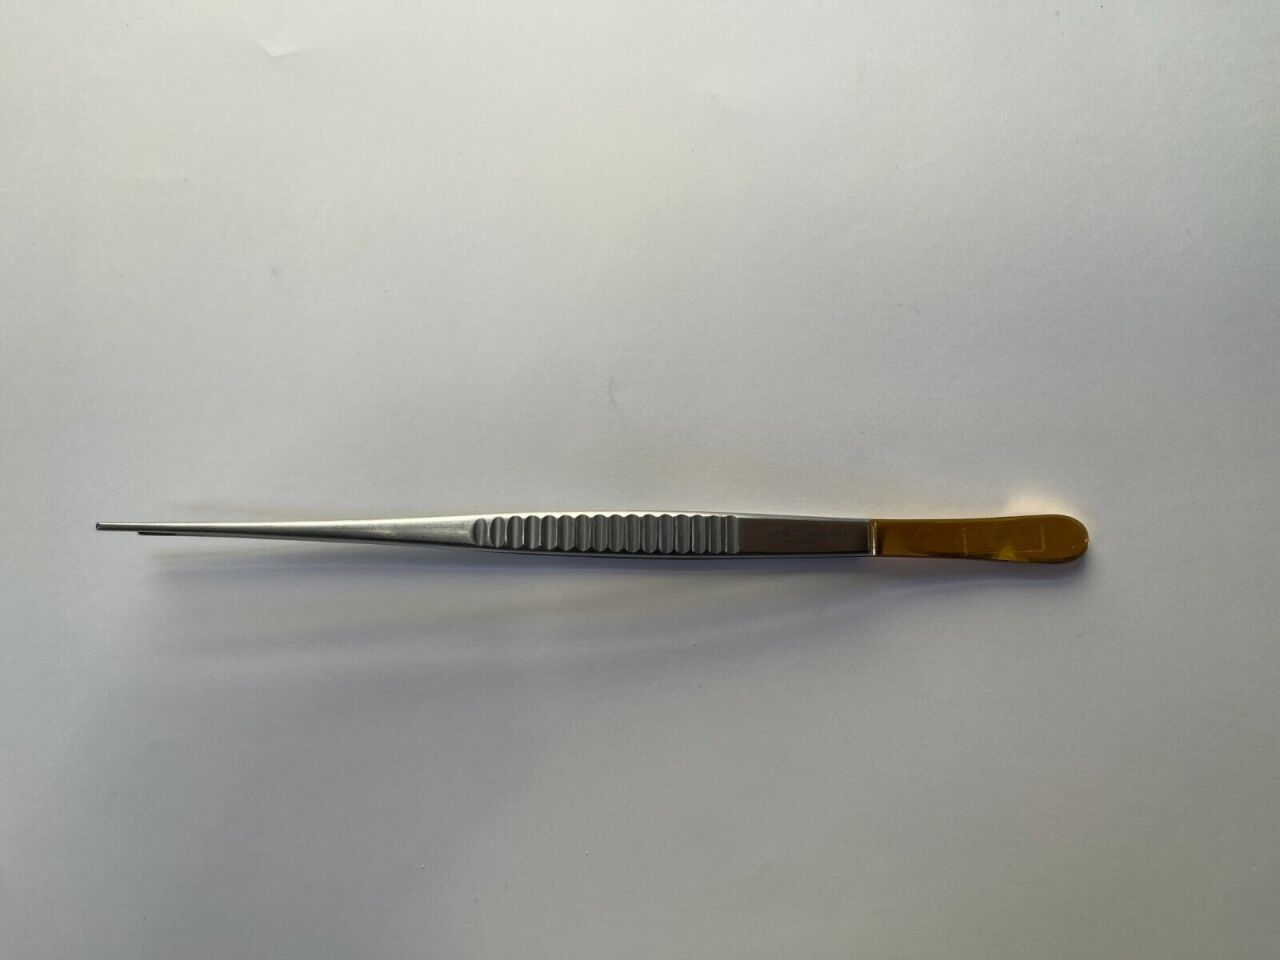 Carb-Bite Debakey Needle/Tissue Pulling Forcep